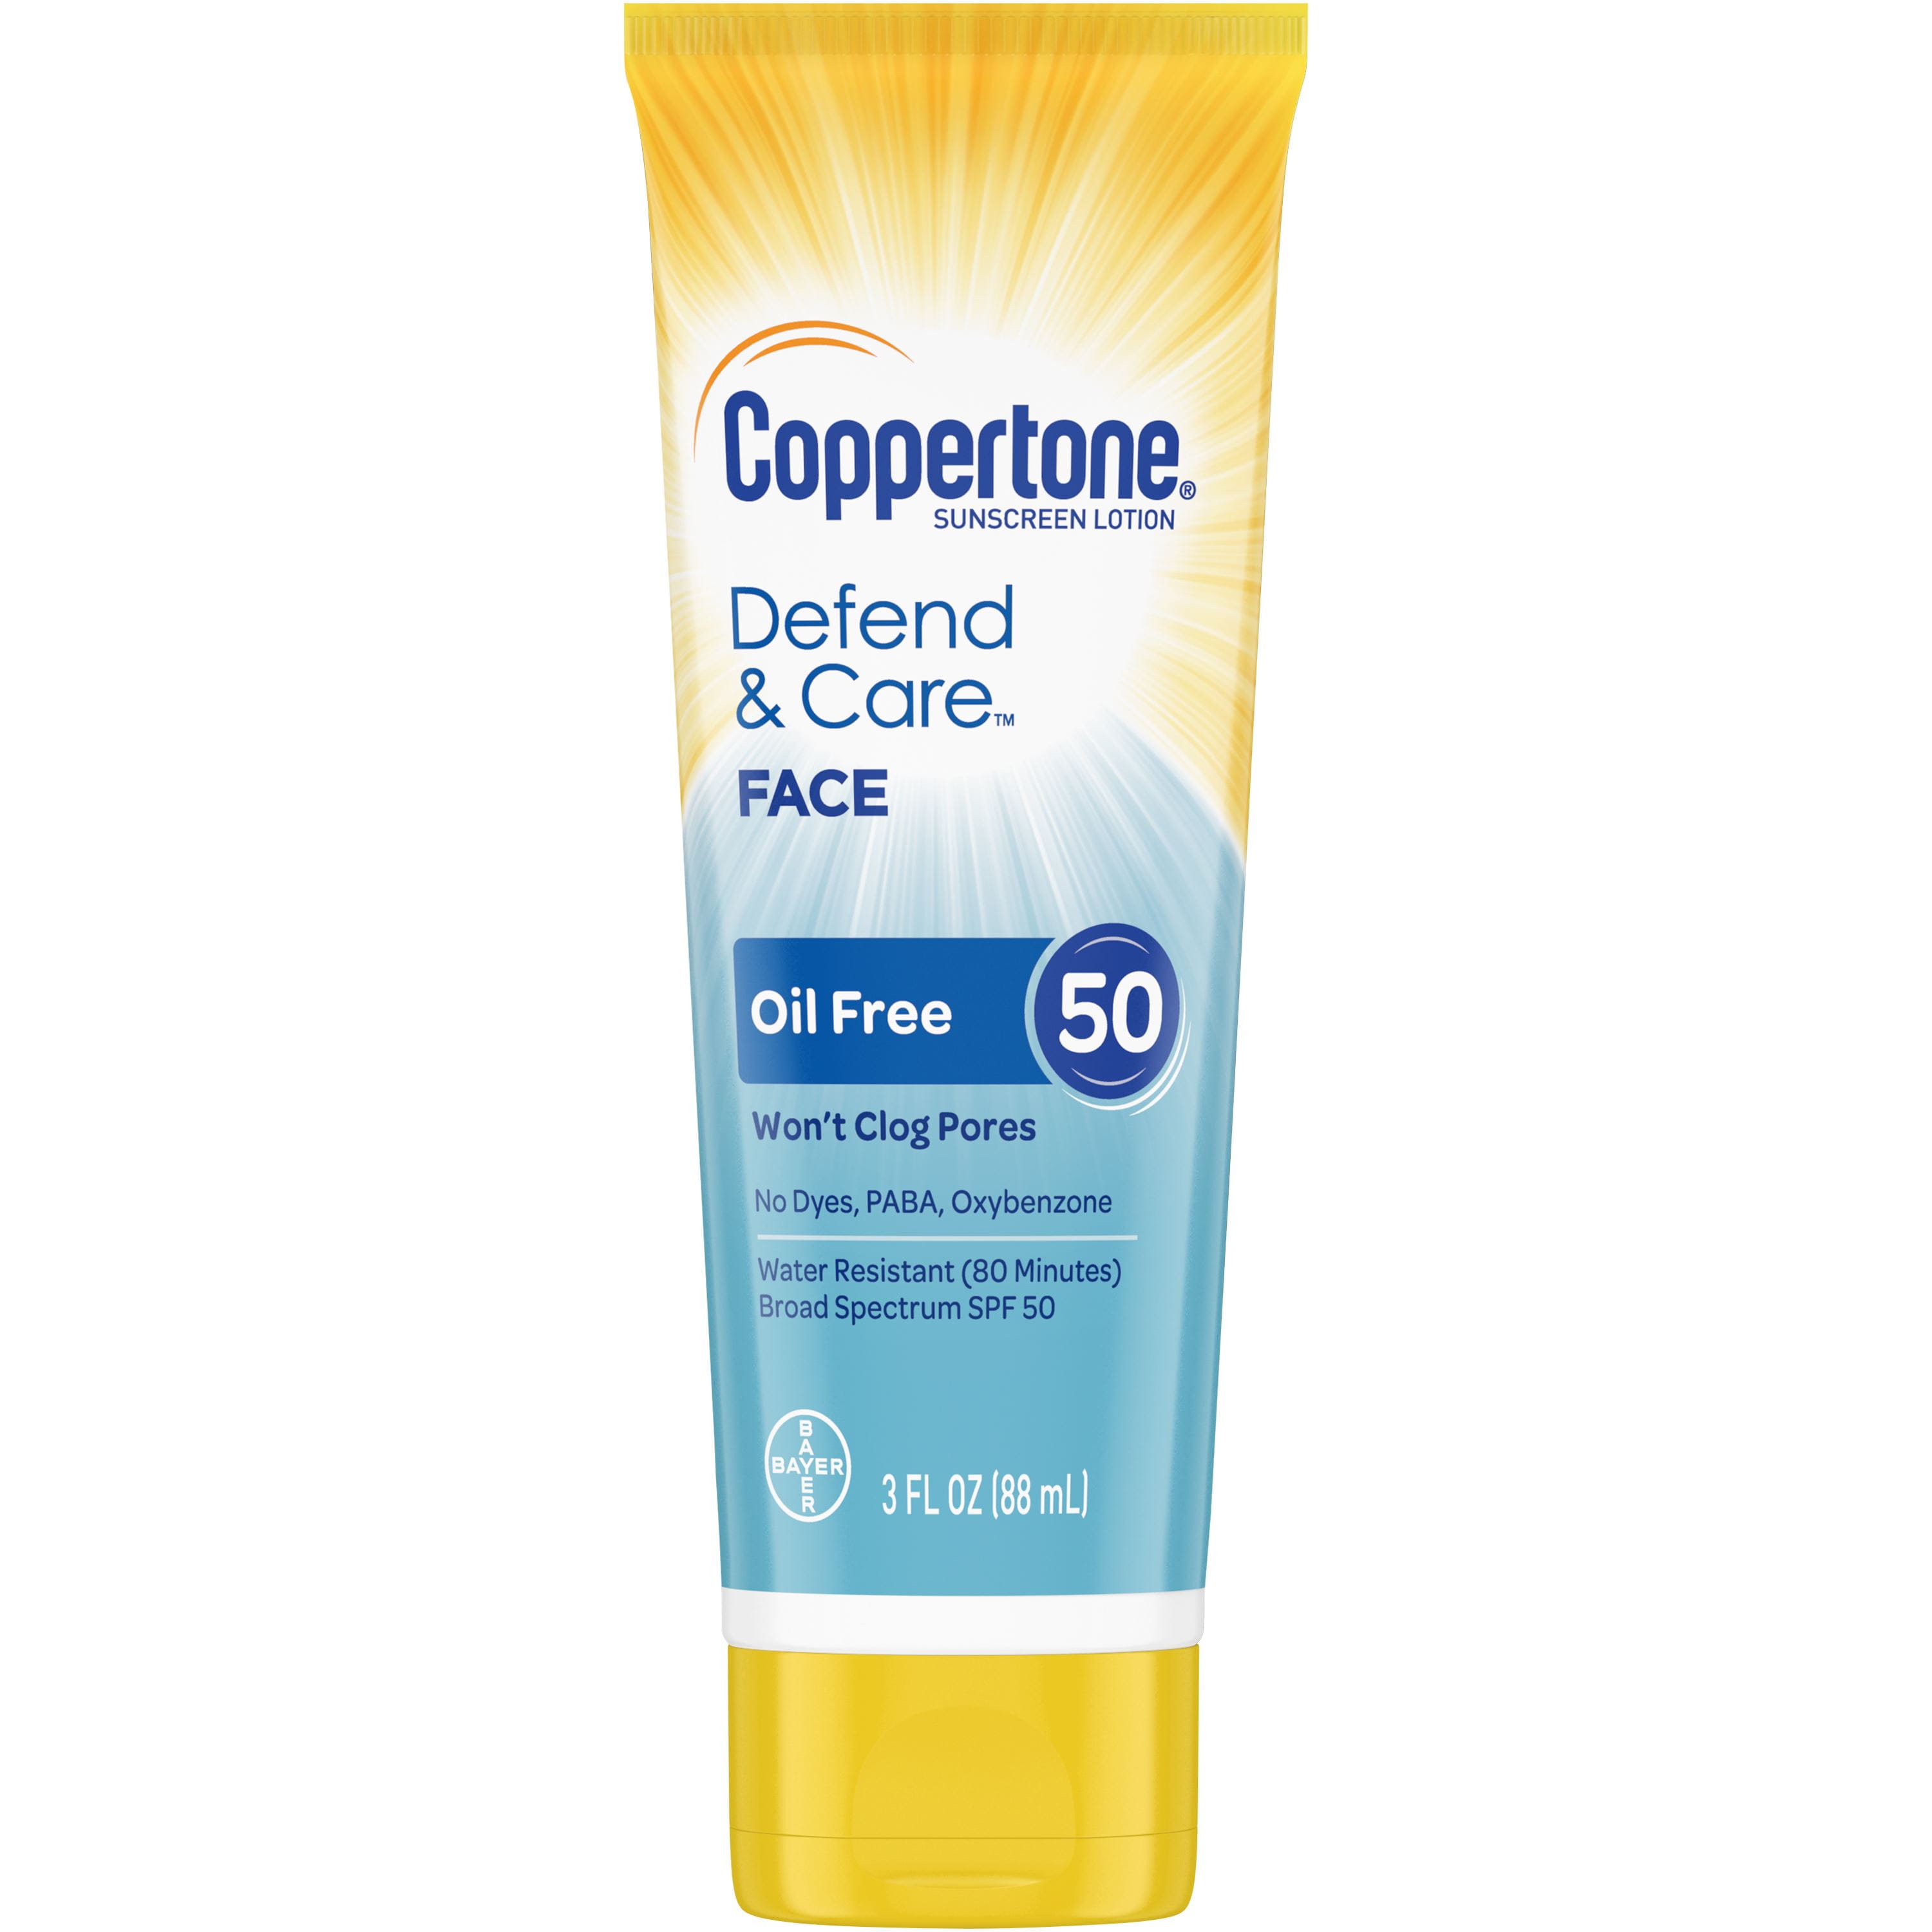 Coppertone-defend-and-care-oil-free